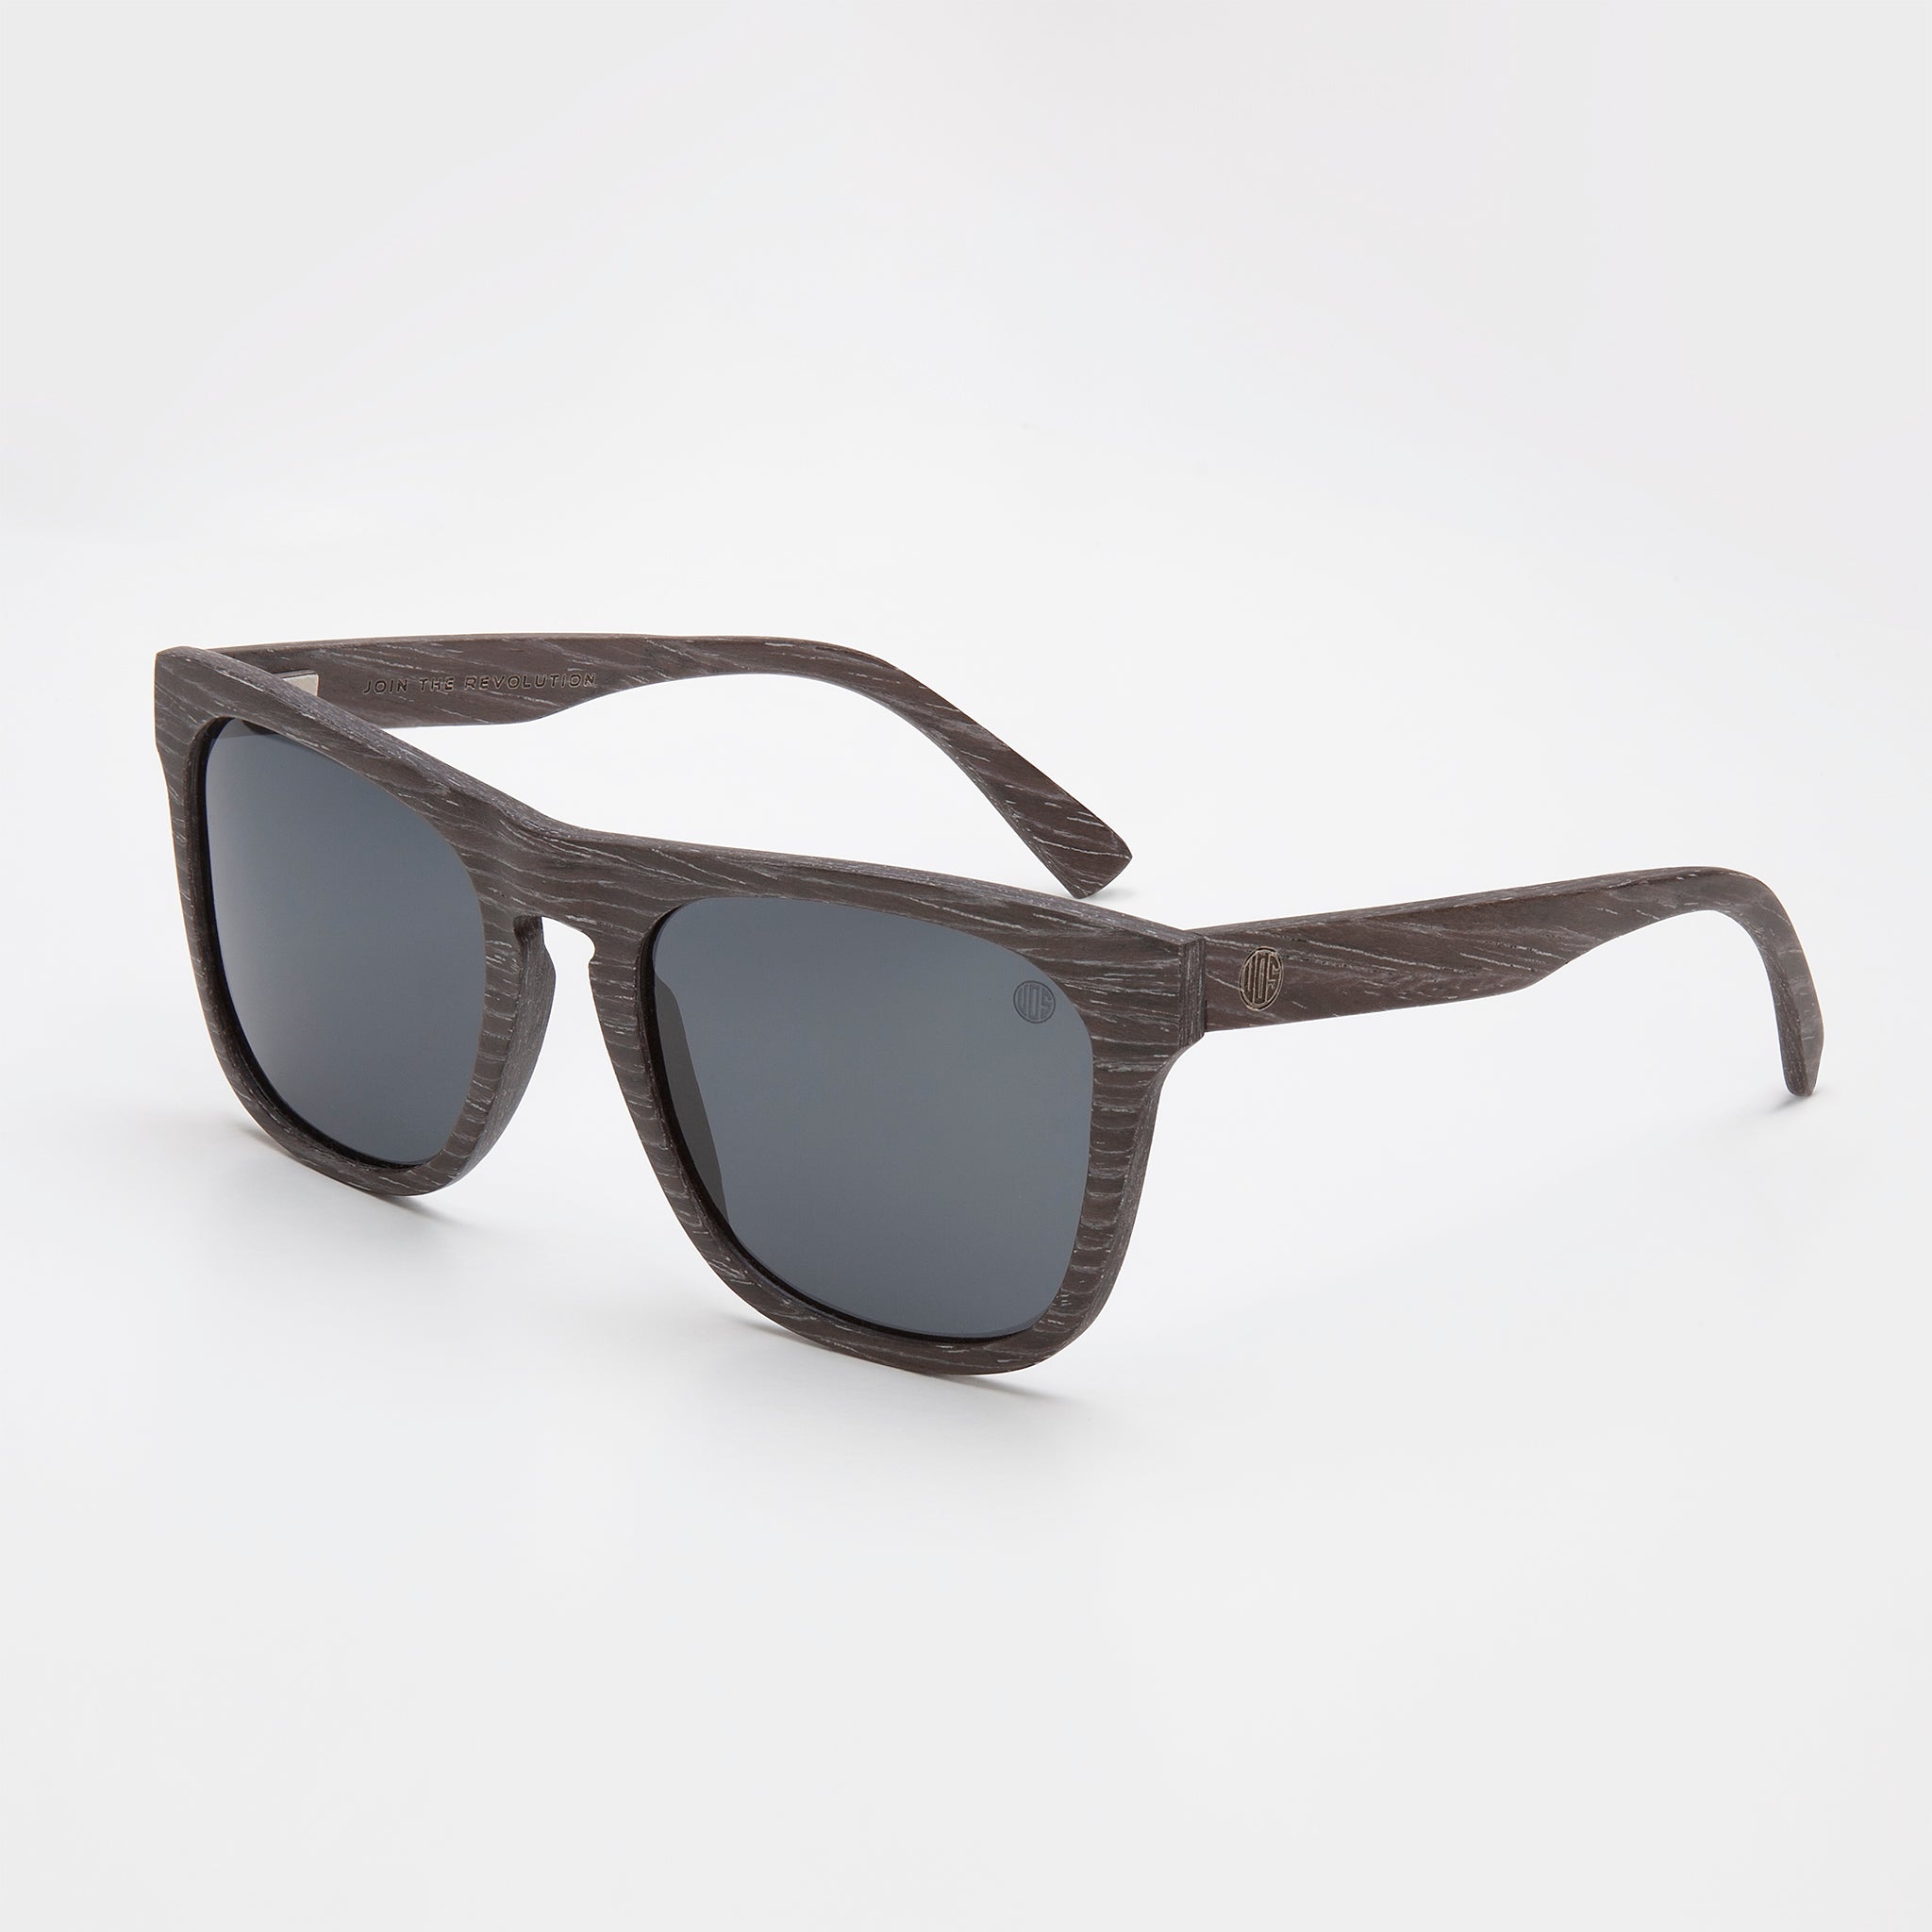 Black wood sunglasses with polarised lens. 